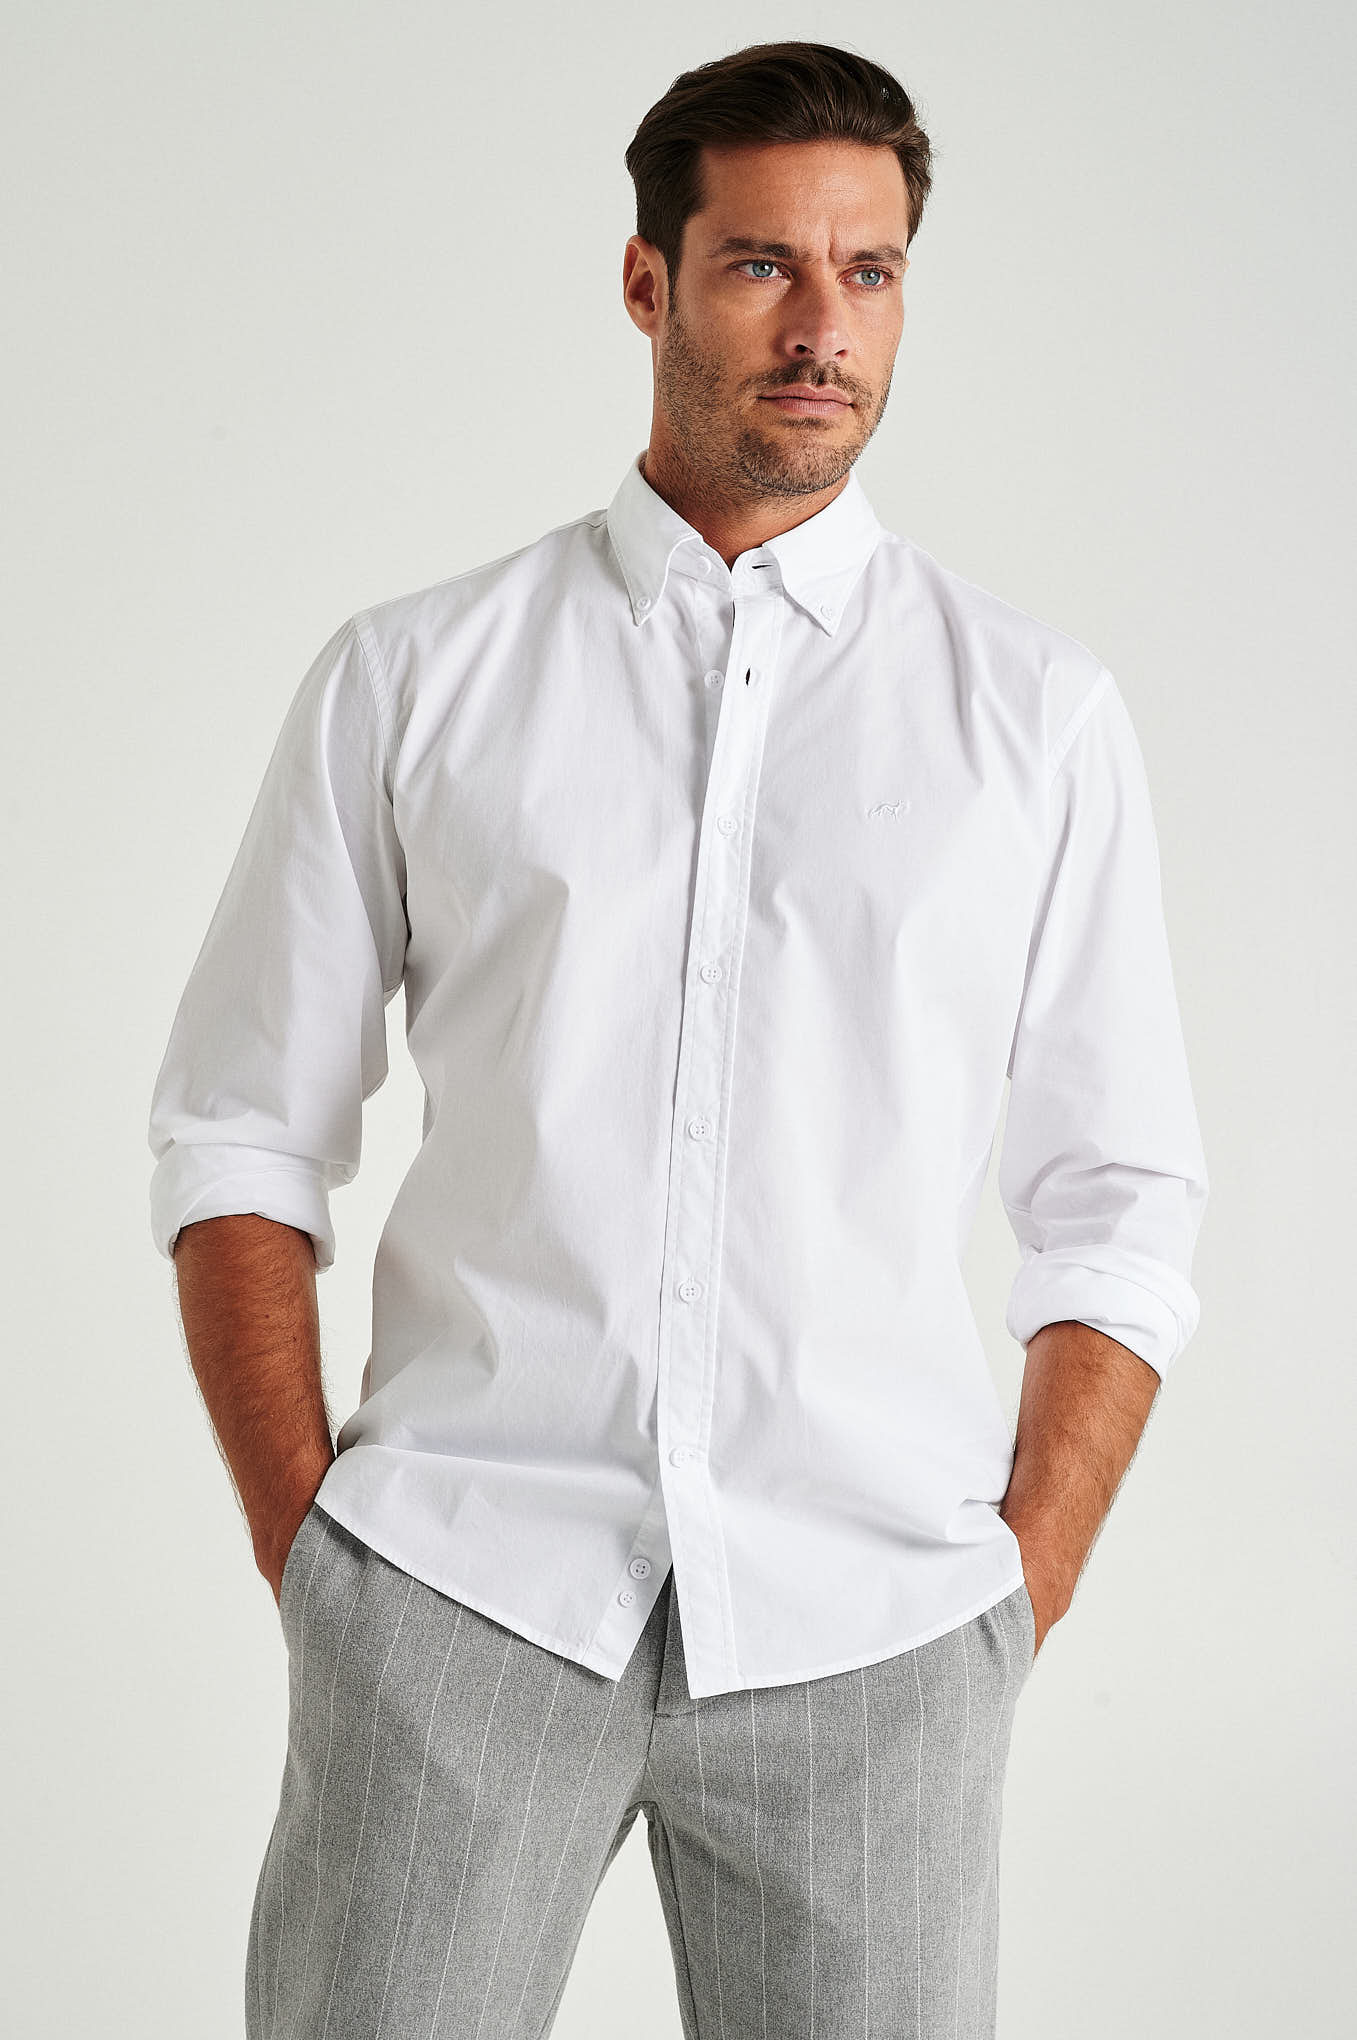 Shirt White Casual Man